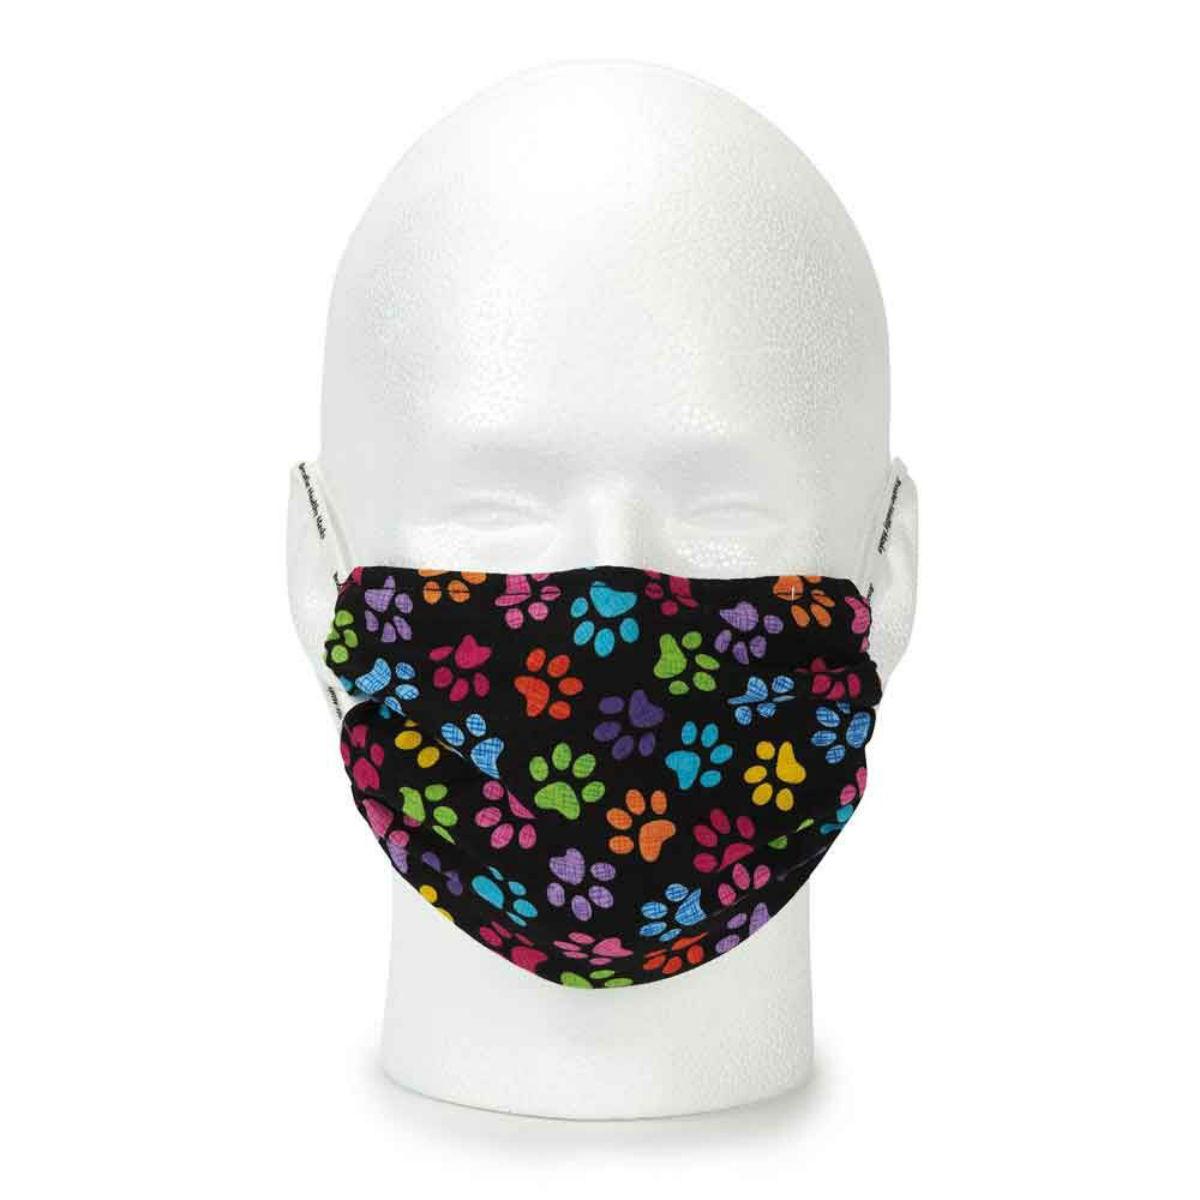 Breathe Healthy Reusable Cloth Human Face Masks - Colorful Paws